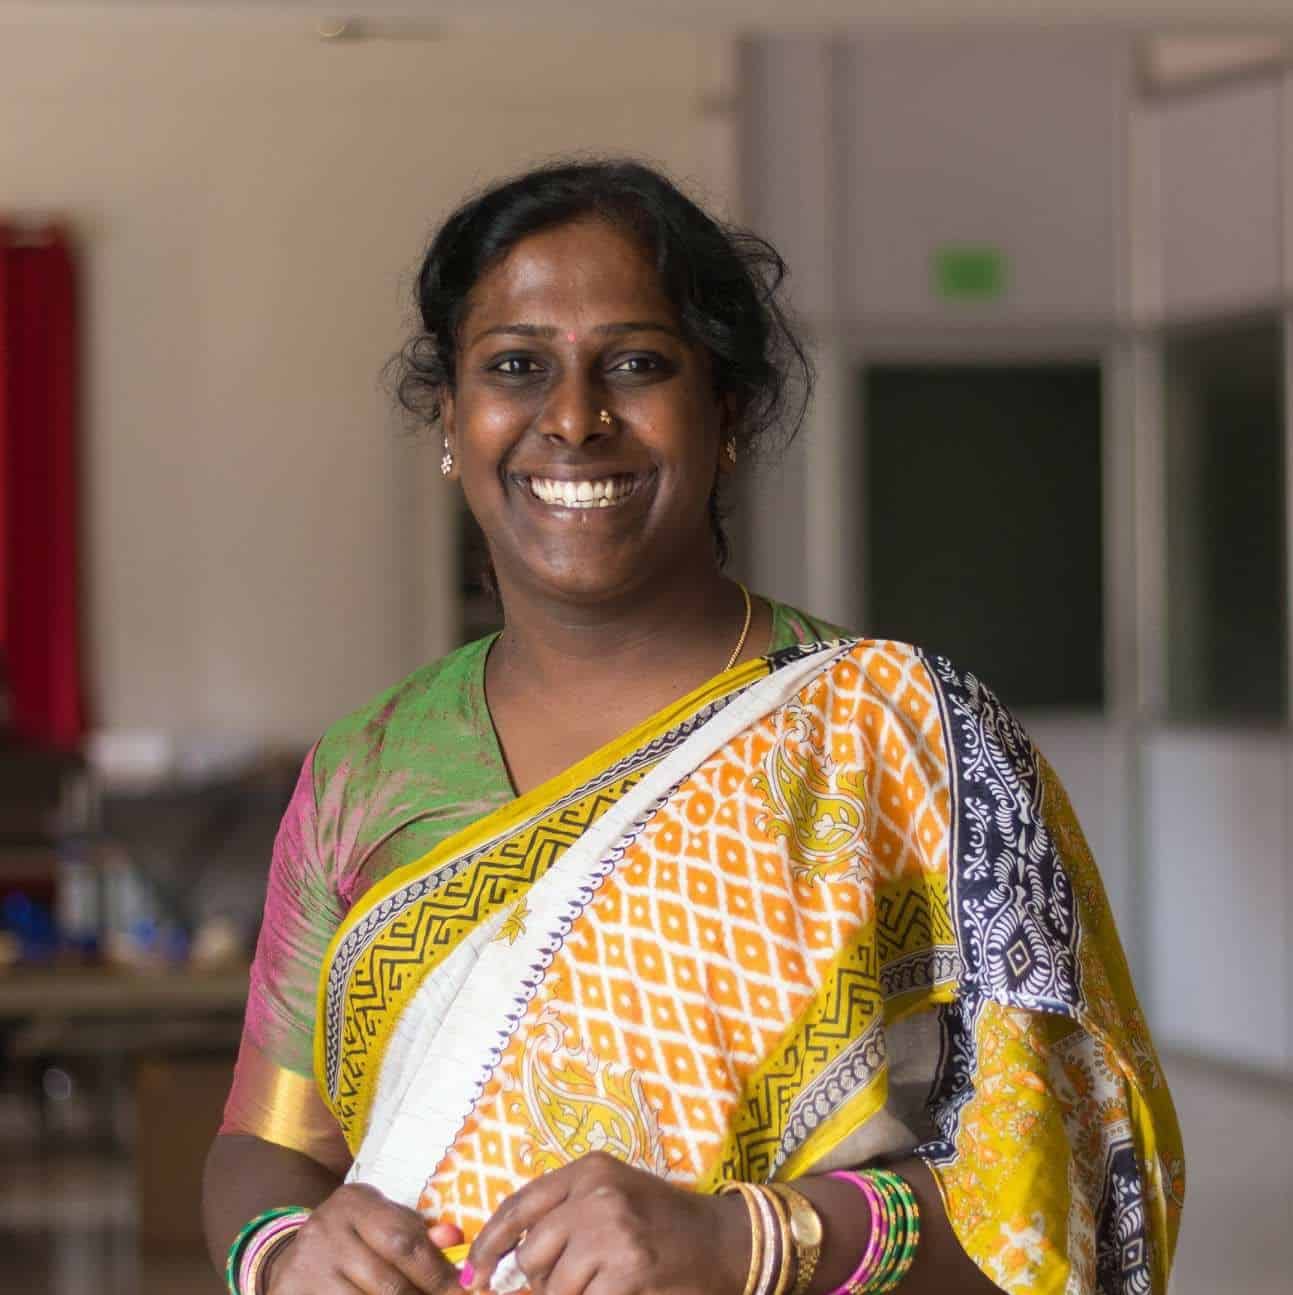 A photo of Akkai Padmashali smiling